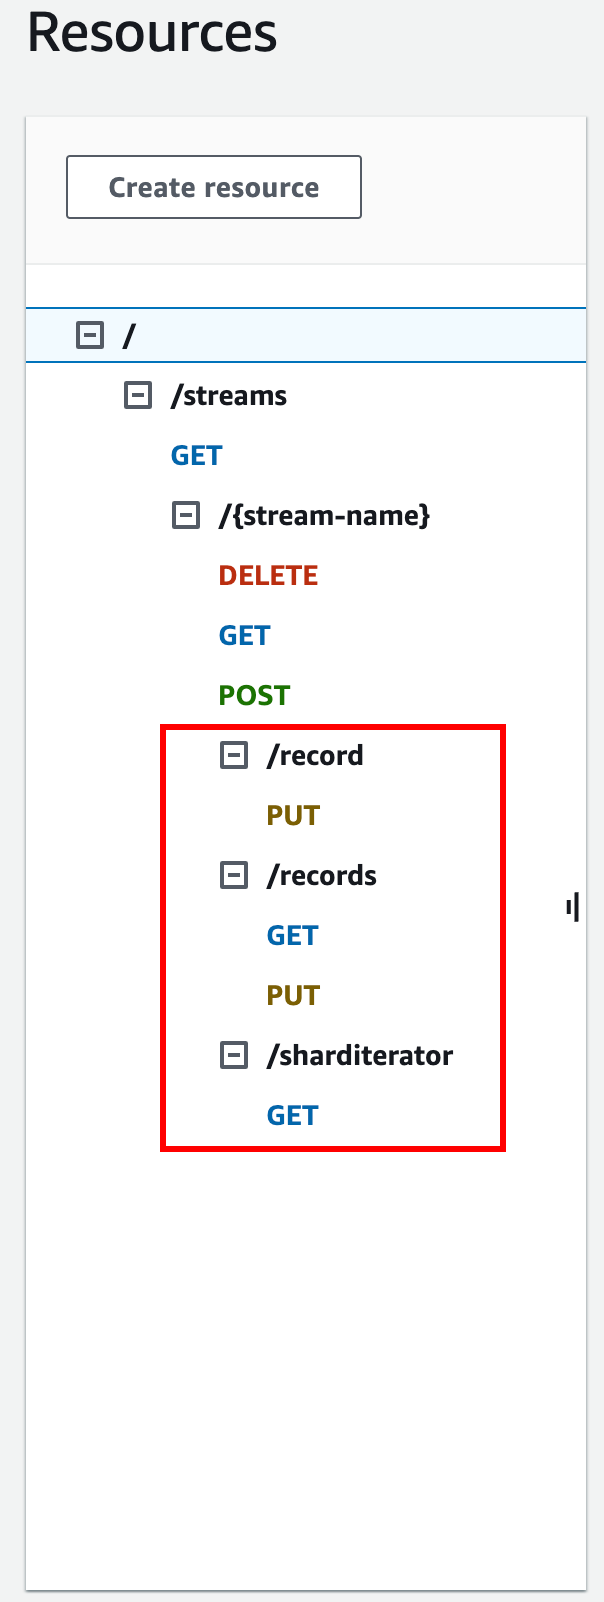 Create Records:GET|PUT|PUT|GET method for the API.